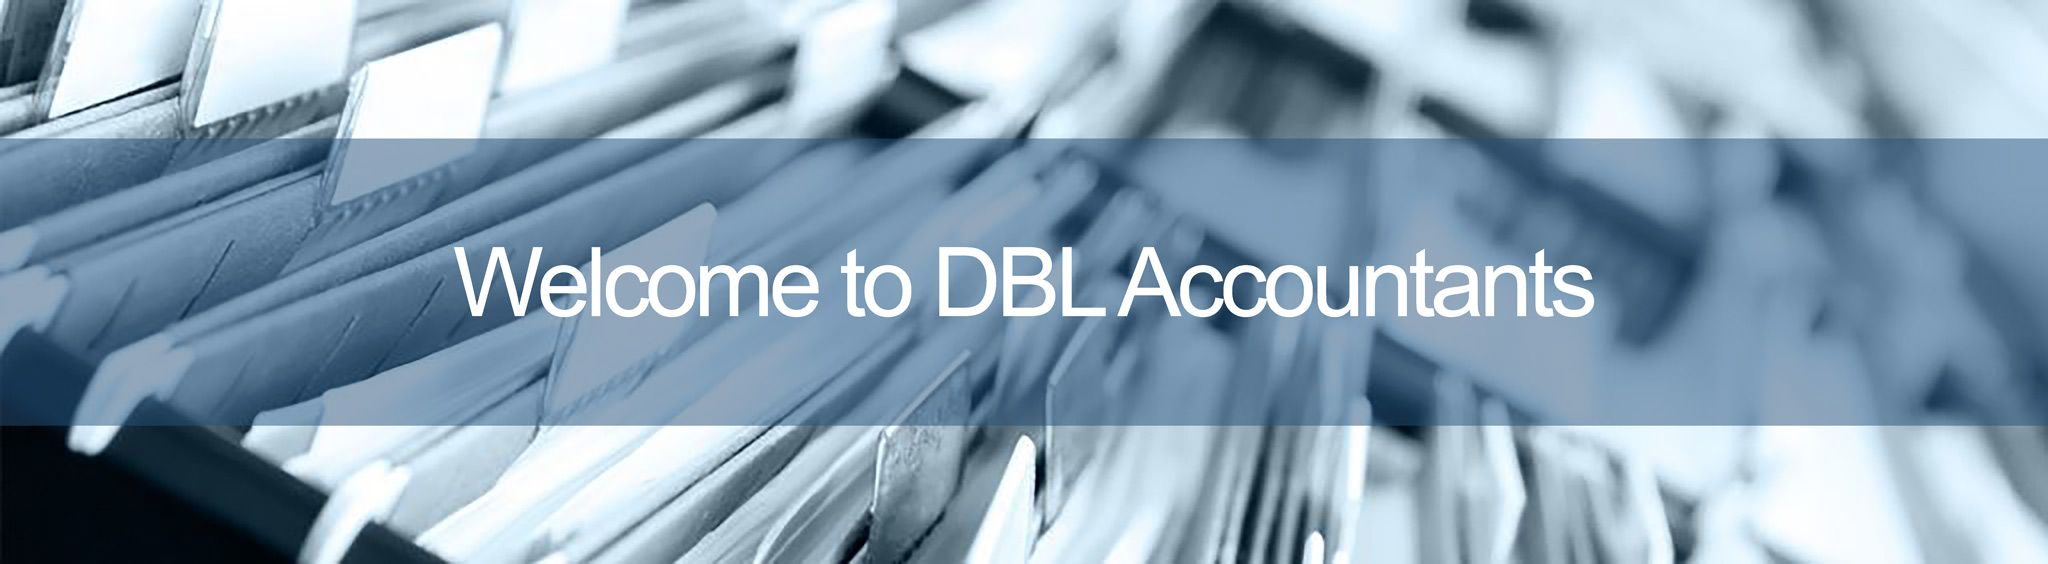 DBL Accountants